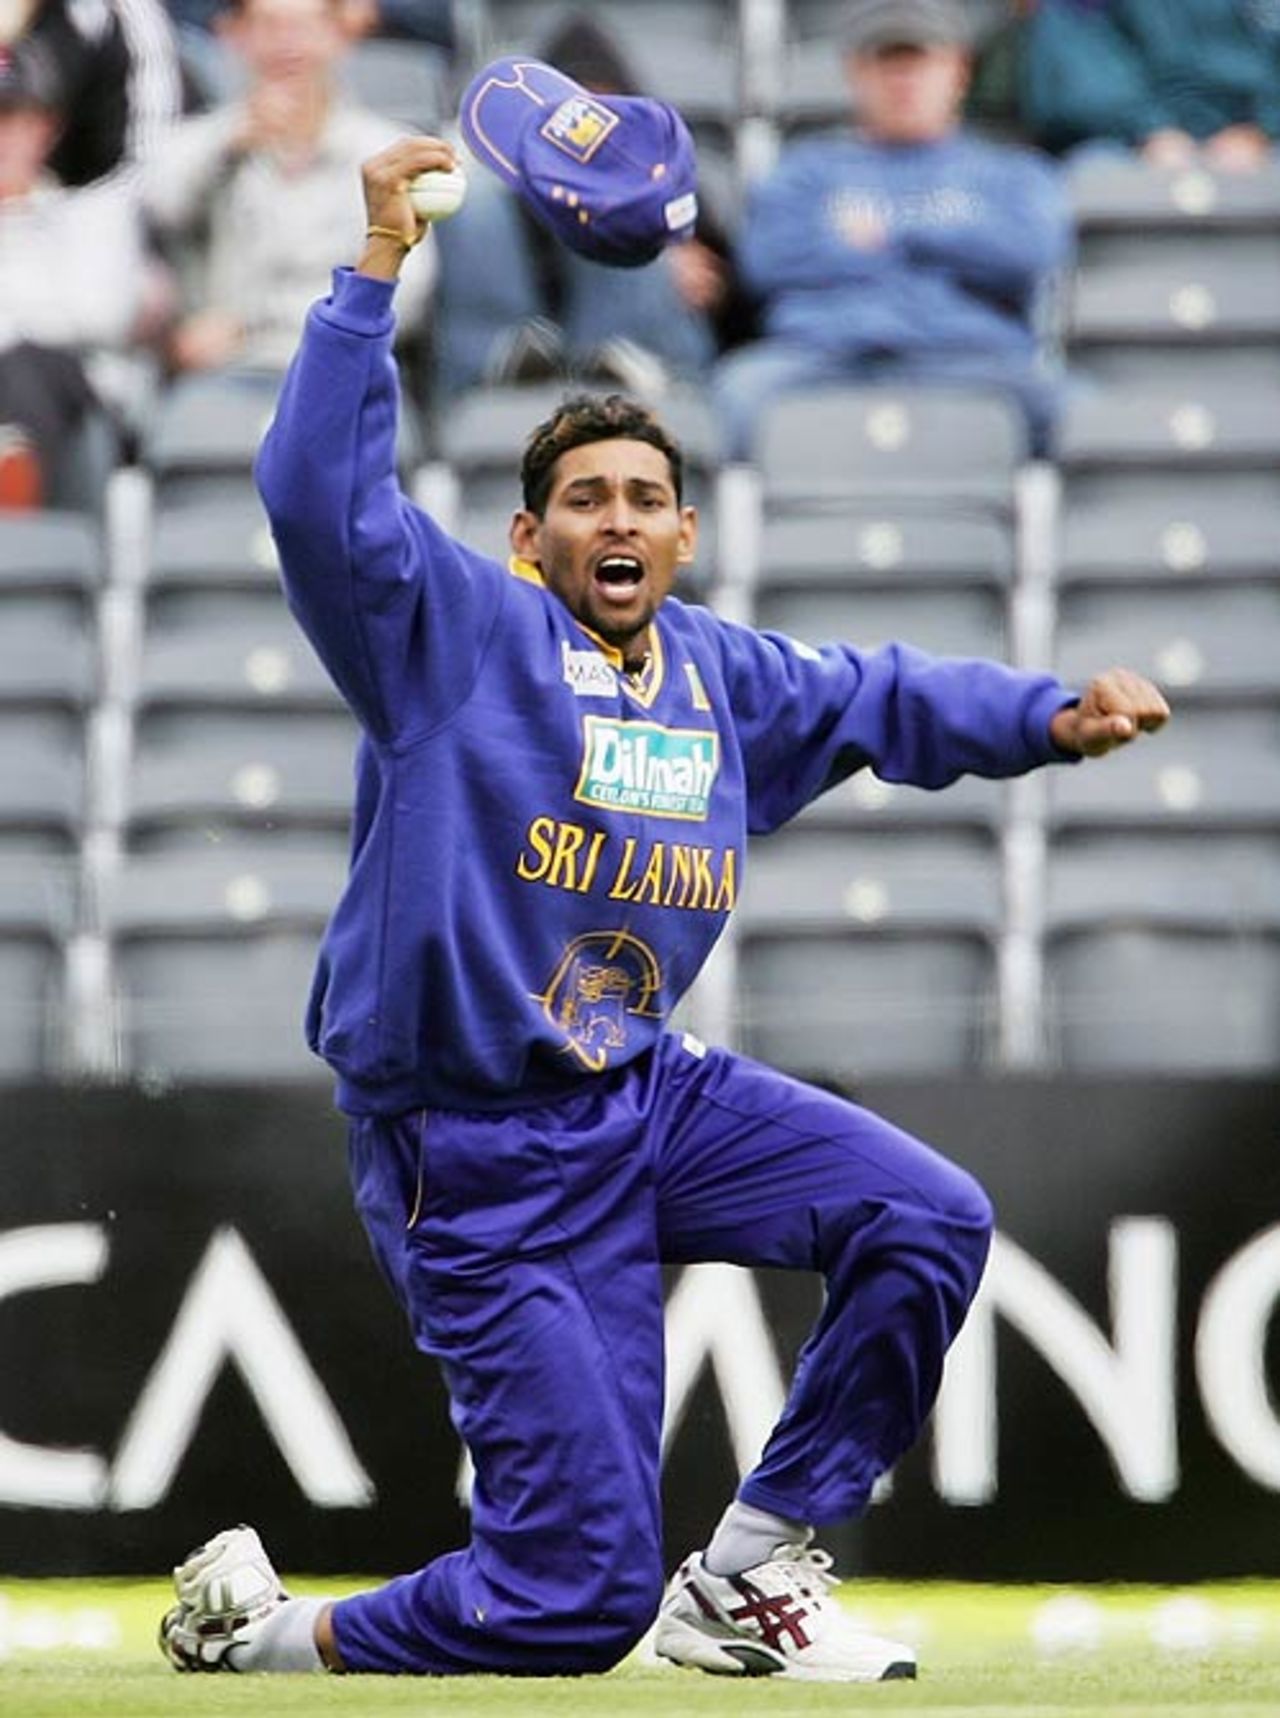 Tillakaratne Dilshan claims a doubtful catch off Ross Taylor, New Zealand v Sri Lanka, 3rd ODI, Christchurch, January 2, 2007